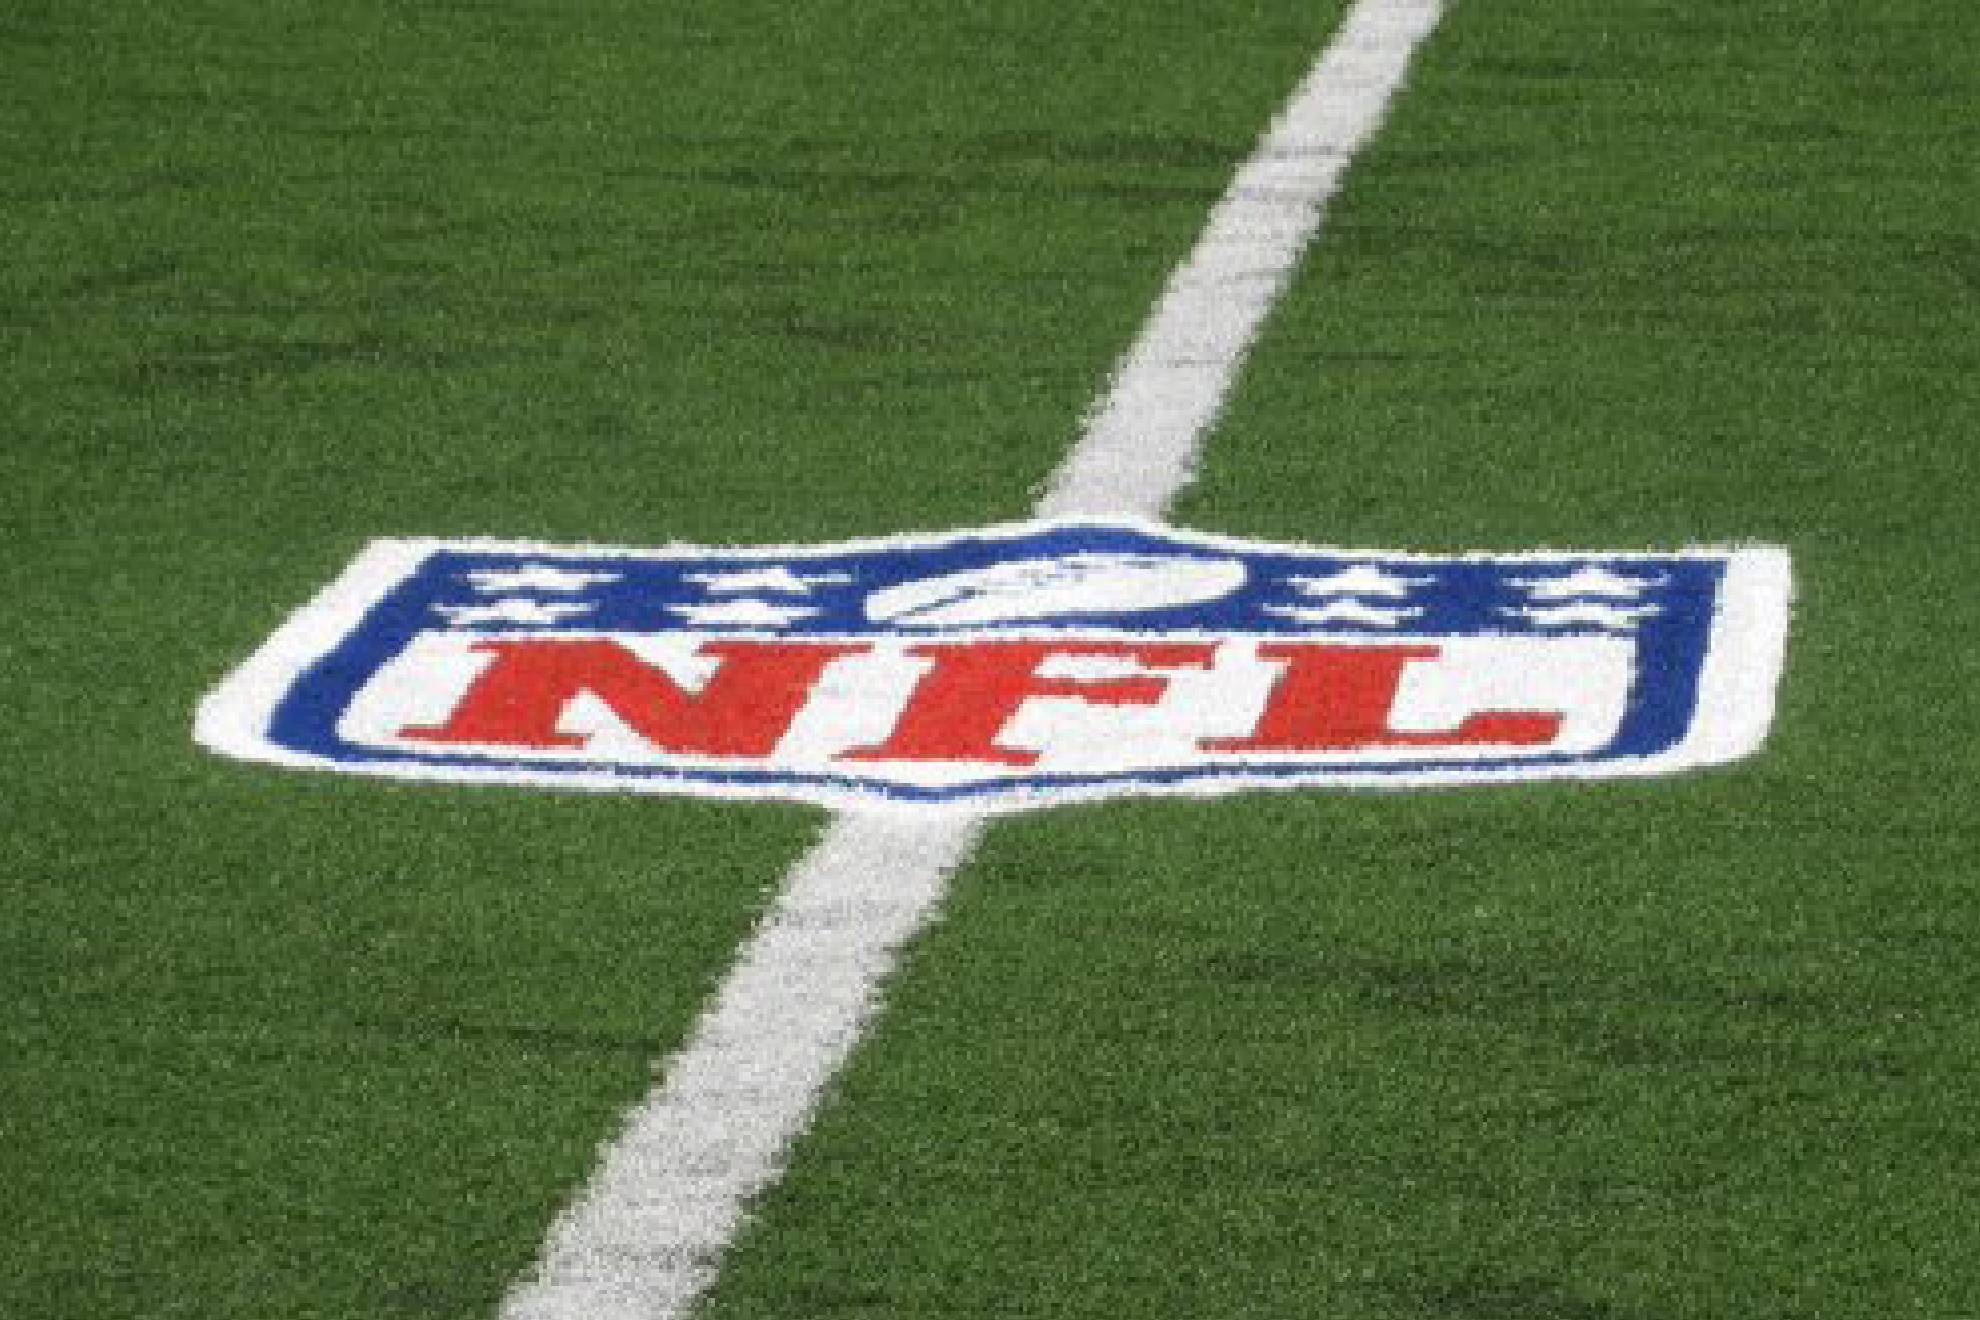 La Etiqueta de Jugador Franquicia da paso a la Agencia Libre en la NFL